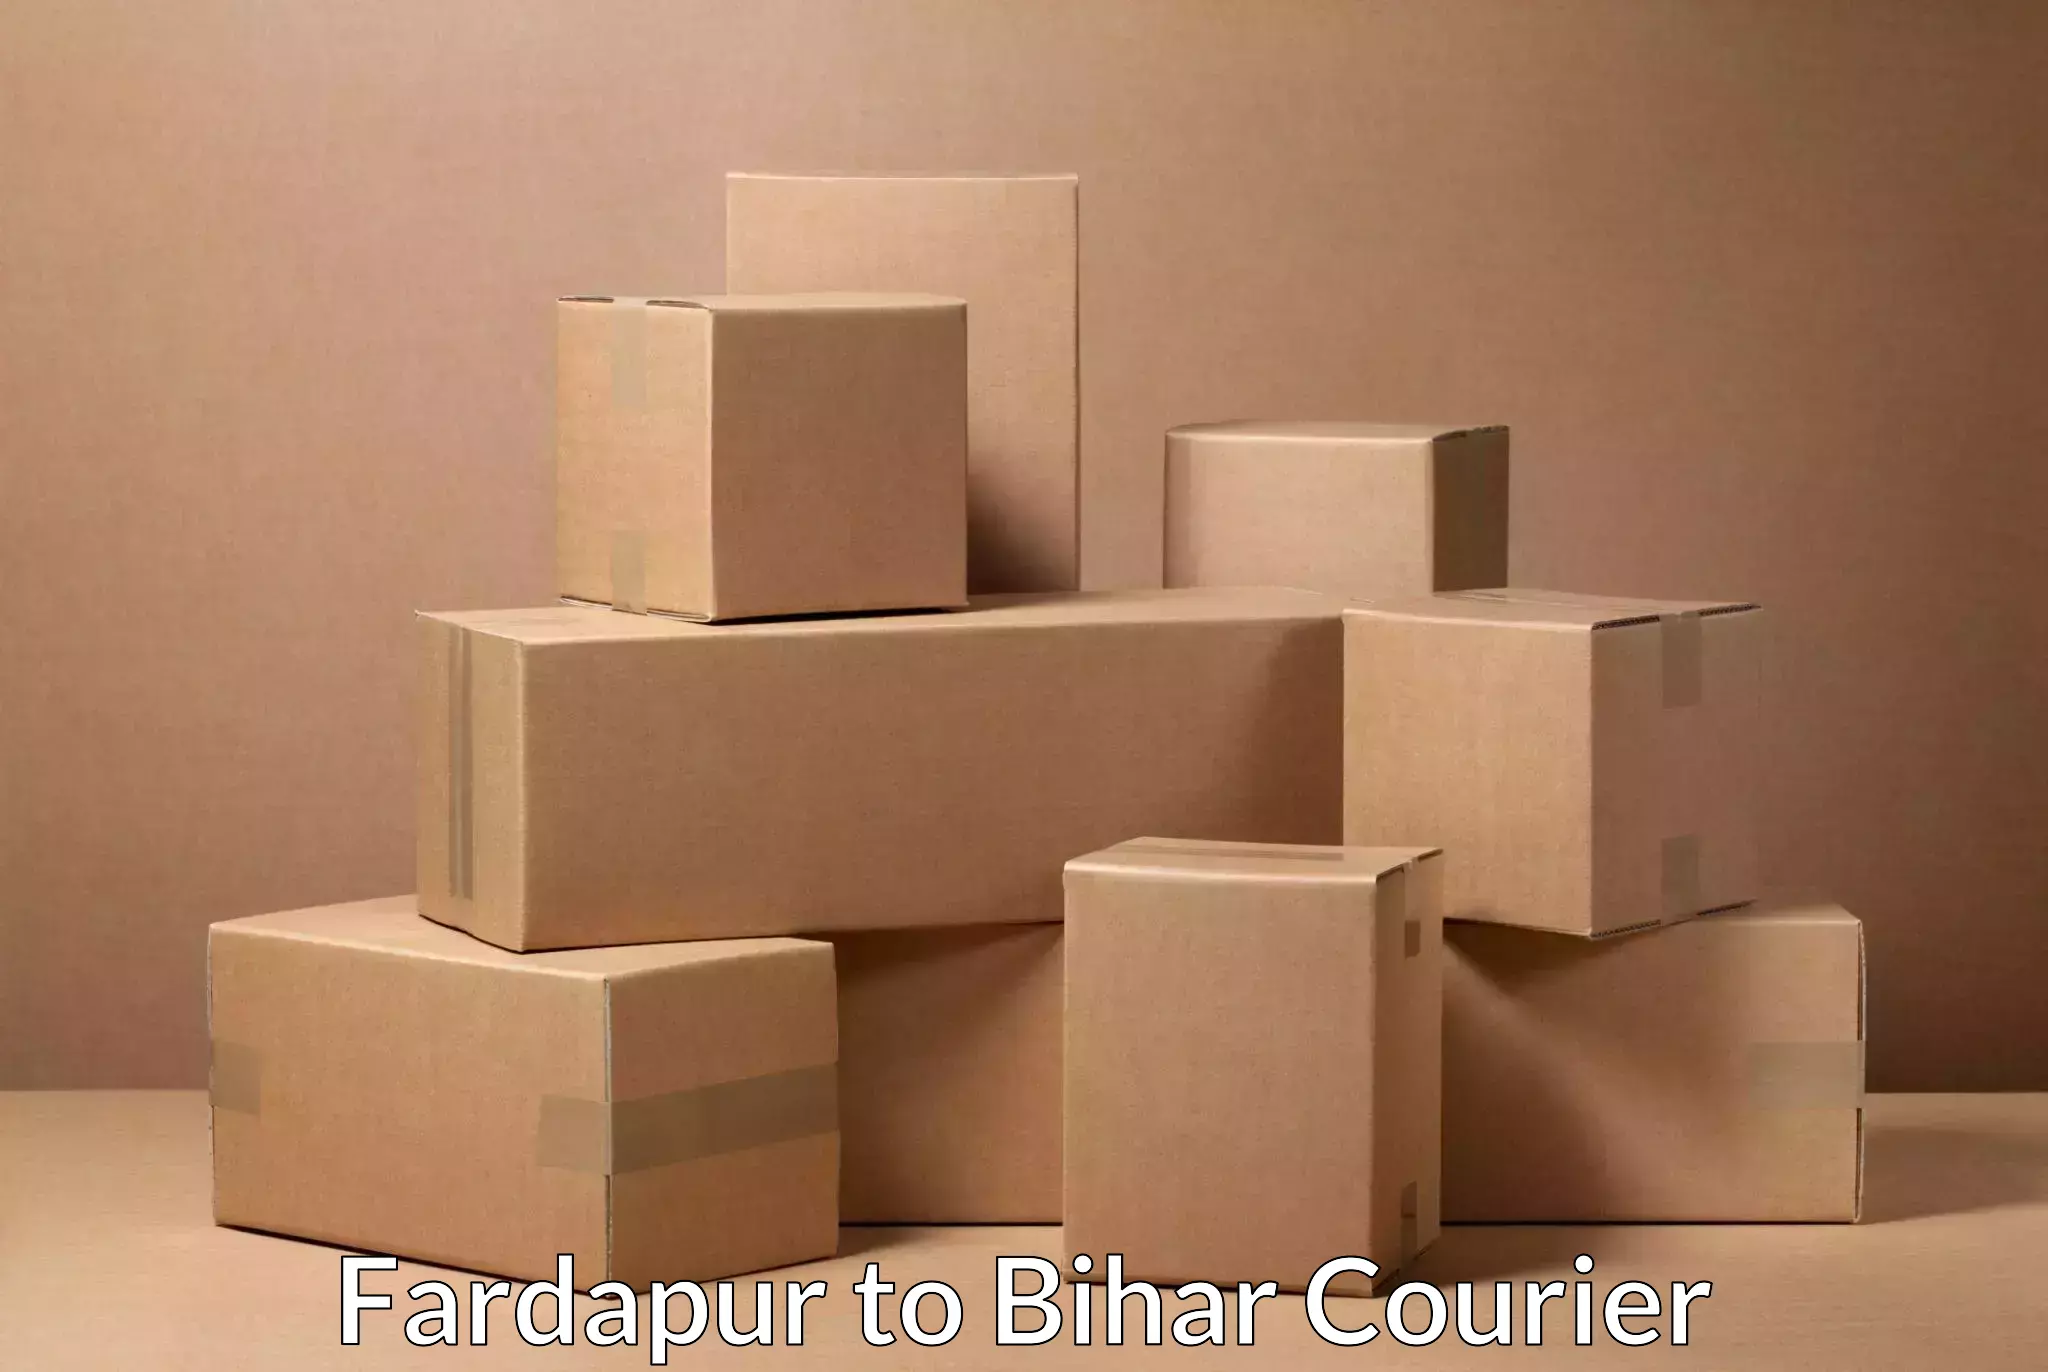 Courier service partnerships in Fardapur to Motihari